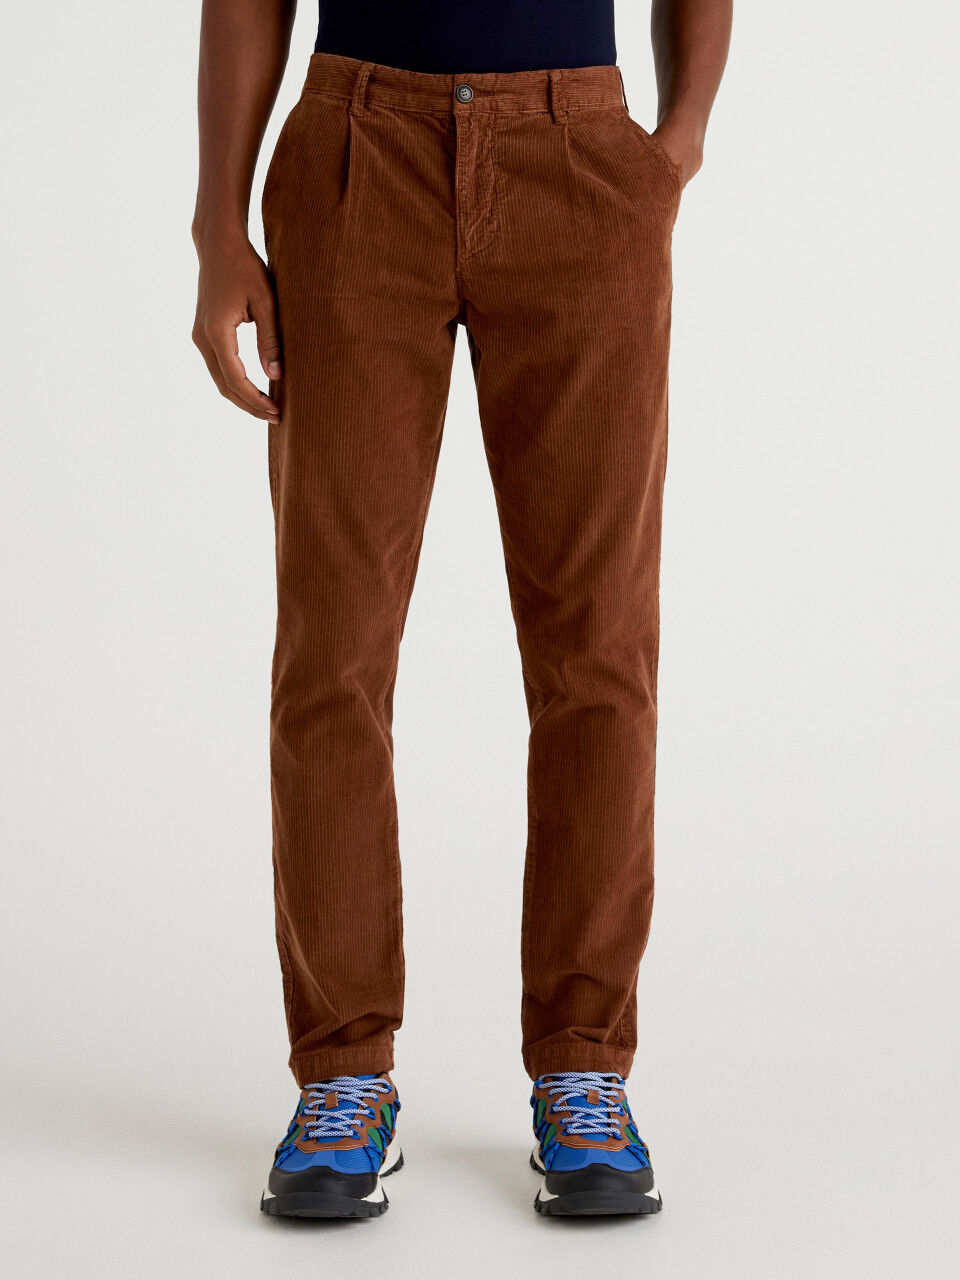 United Colors of Benetton Mens Slim Fit Formal Trousers  18P4CTWB7029IRust36  Amazonin Fashion